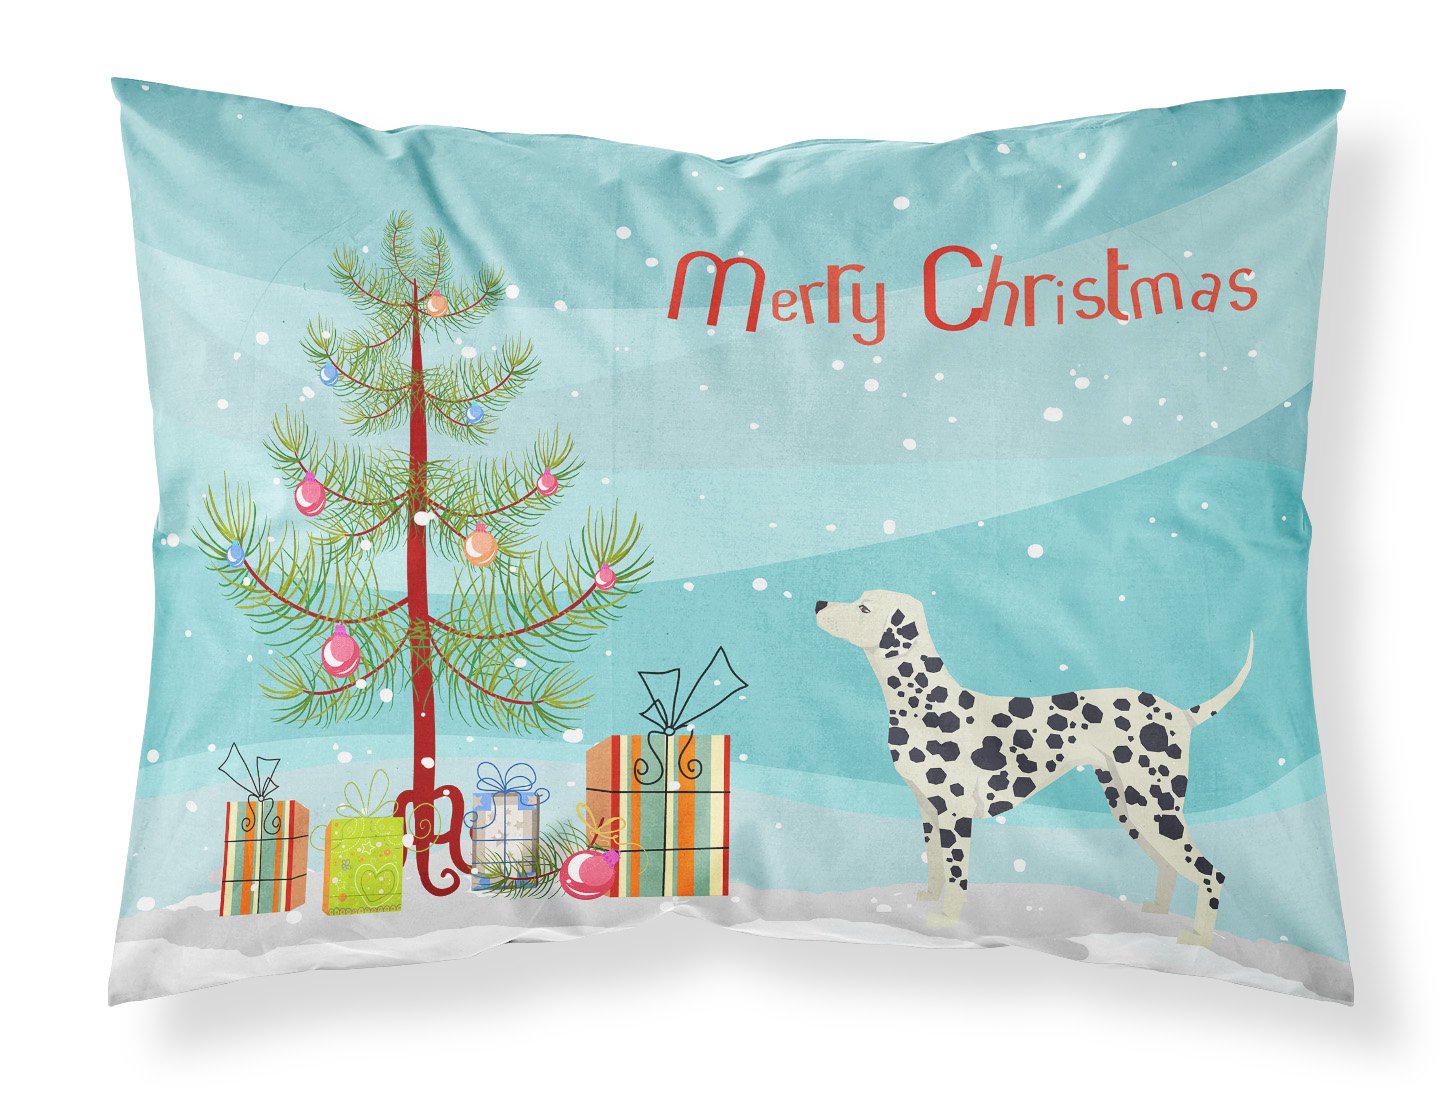 Dalmatian Christmas Tree Fabric Standard Pillowcase CK3534PILLOWCASE by Caroline's Treasures